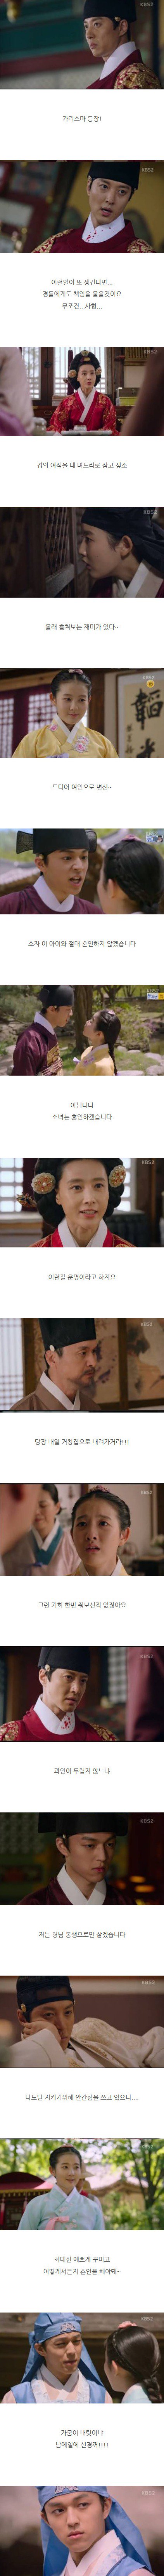 episode 2 captures for the Korean drama 'Queen for 7 Days'